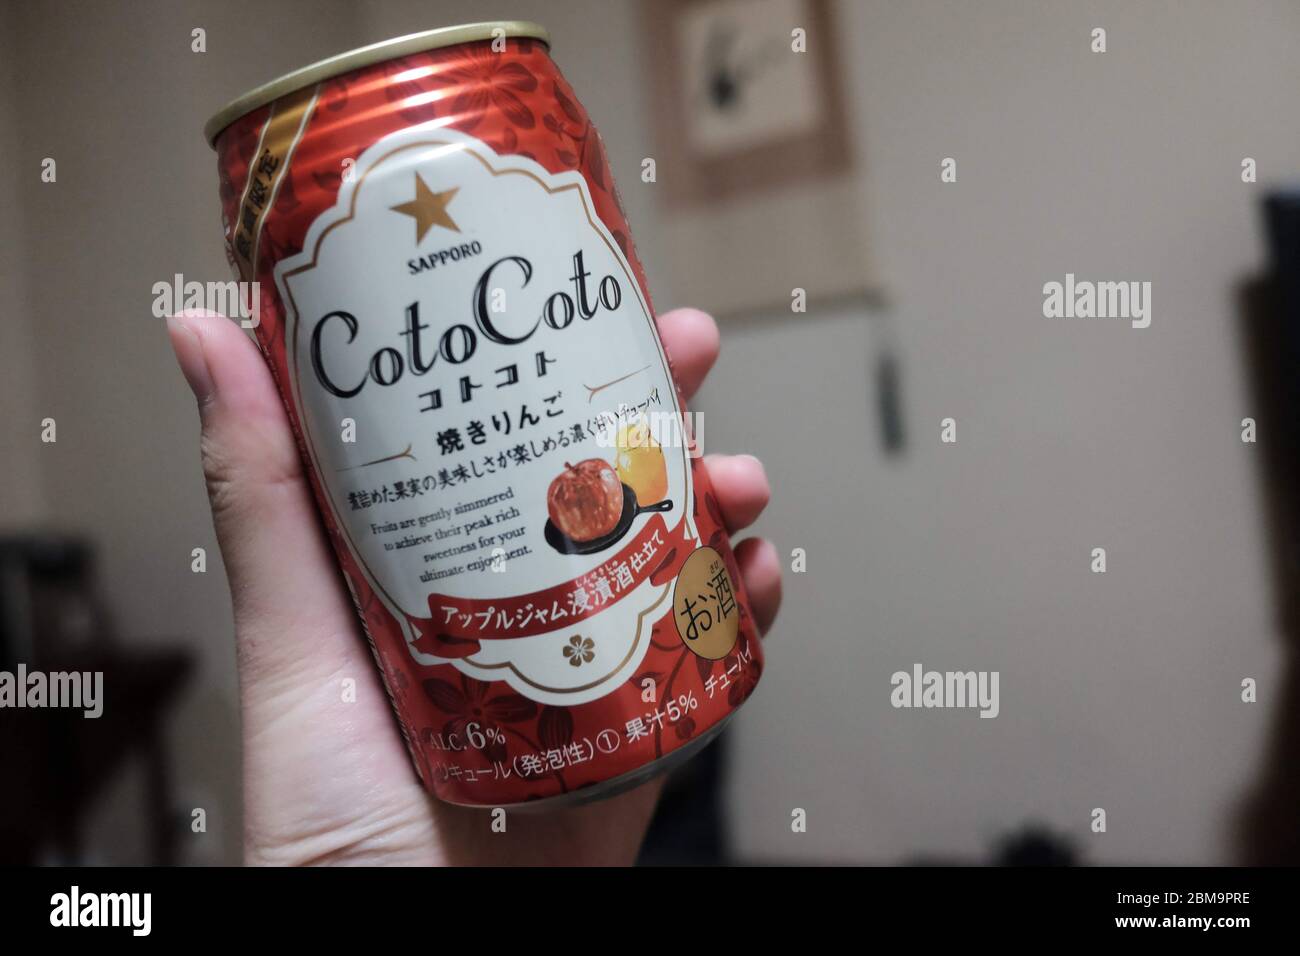 Coto Coto Beer in Hand in Room, Japan Stock Photo